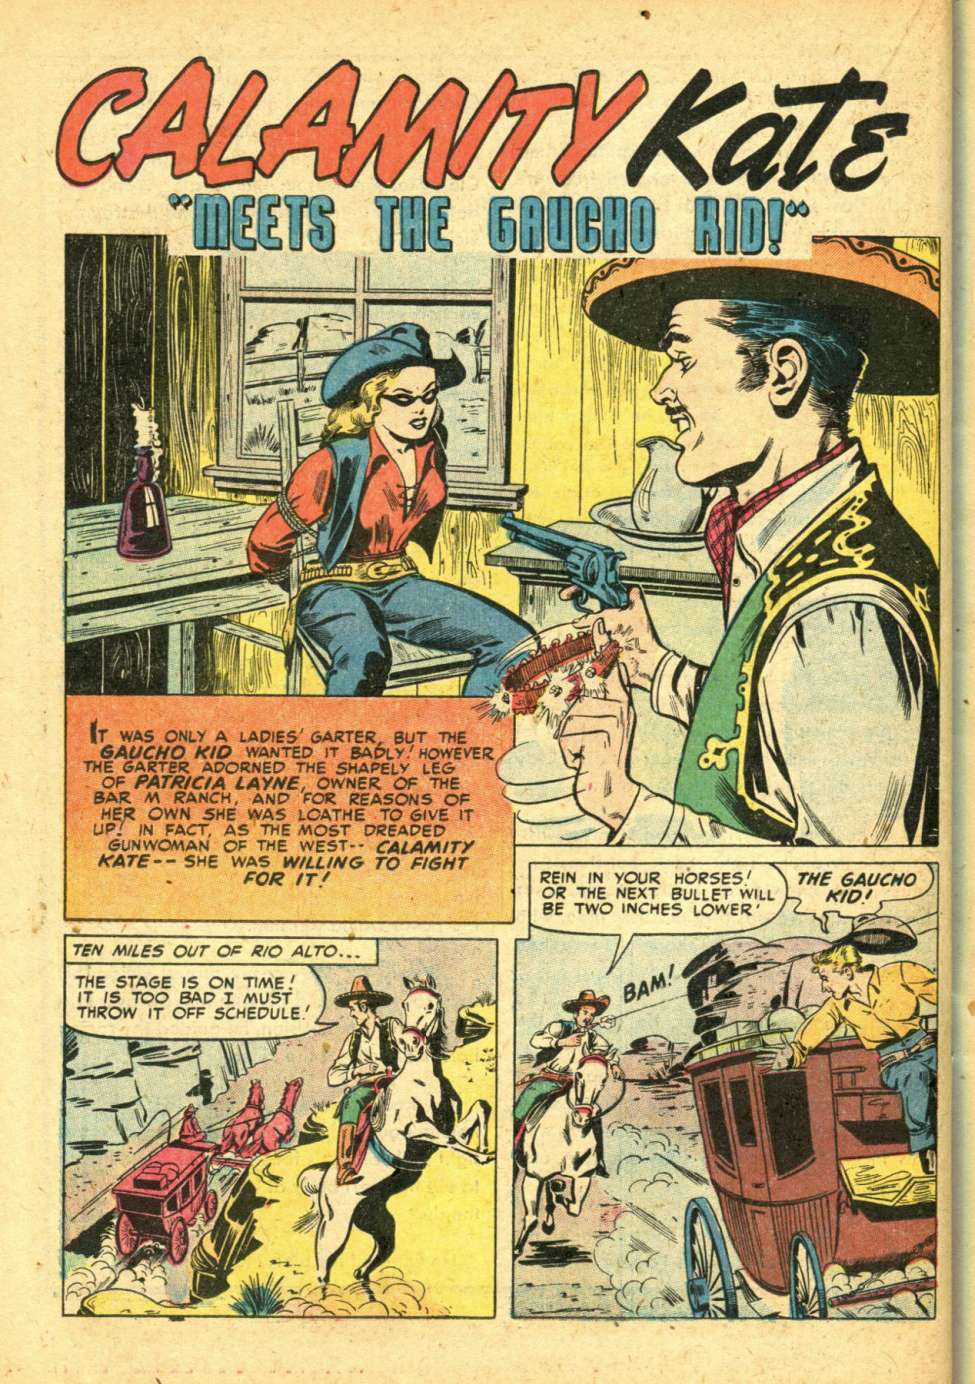 Calamity Kate September 1950 Comic. by charlton22 on DeviantArt